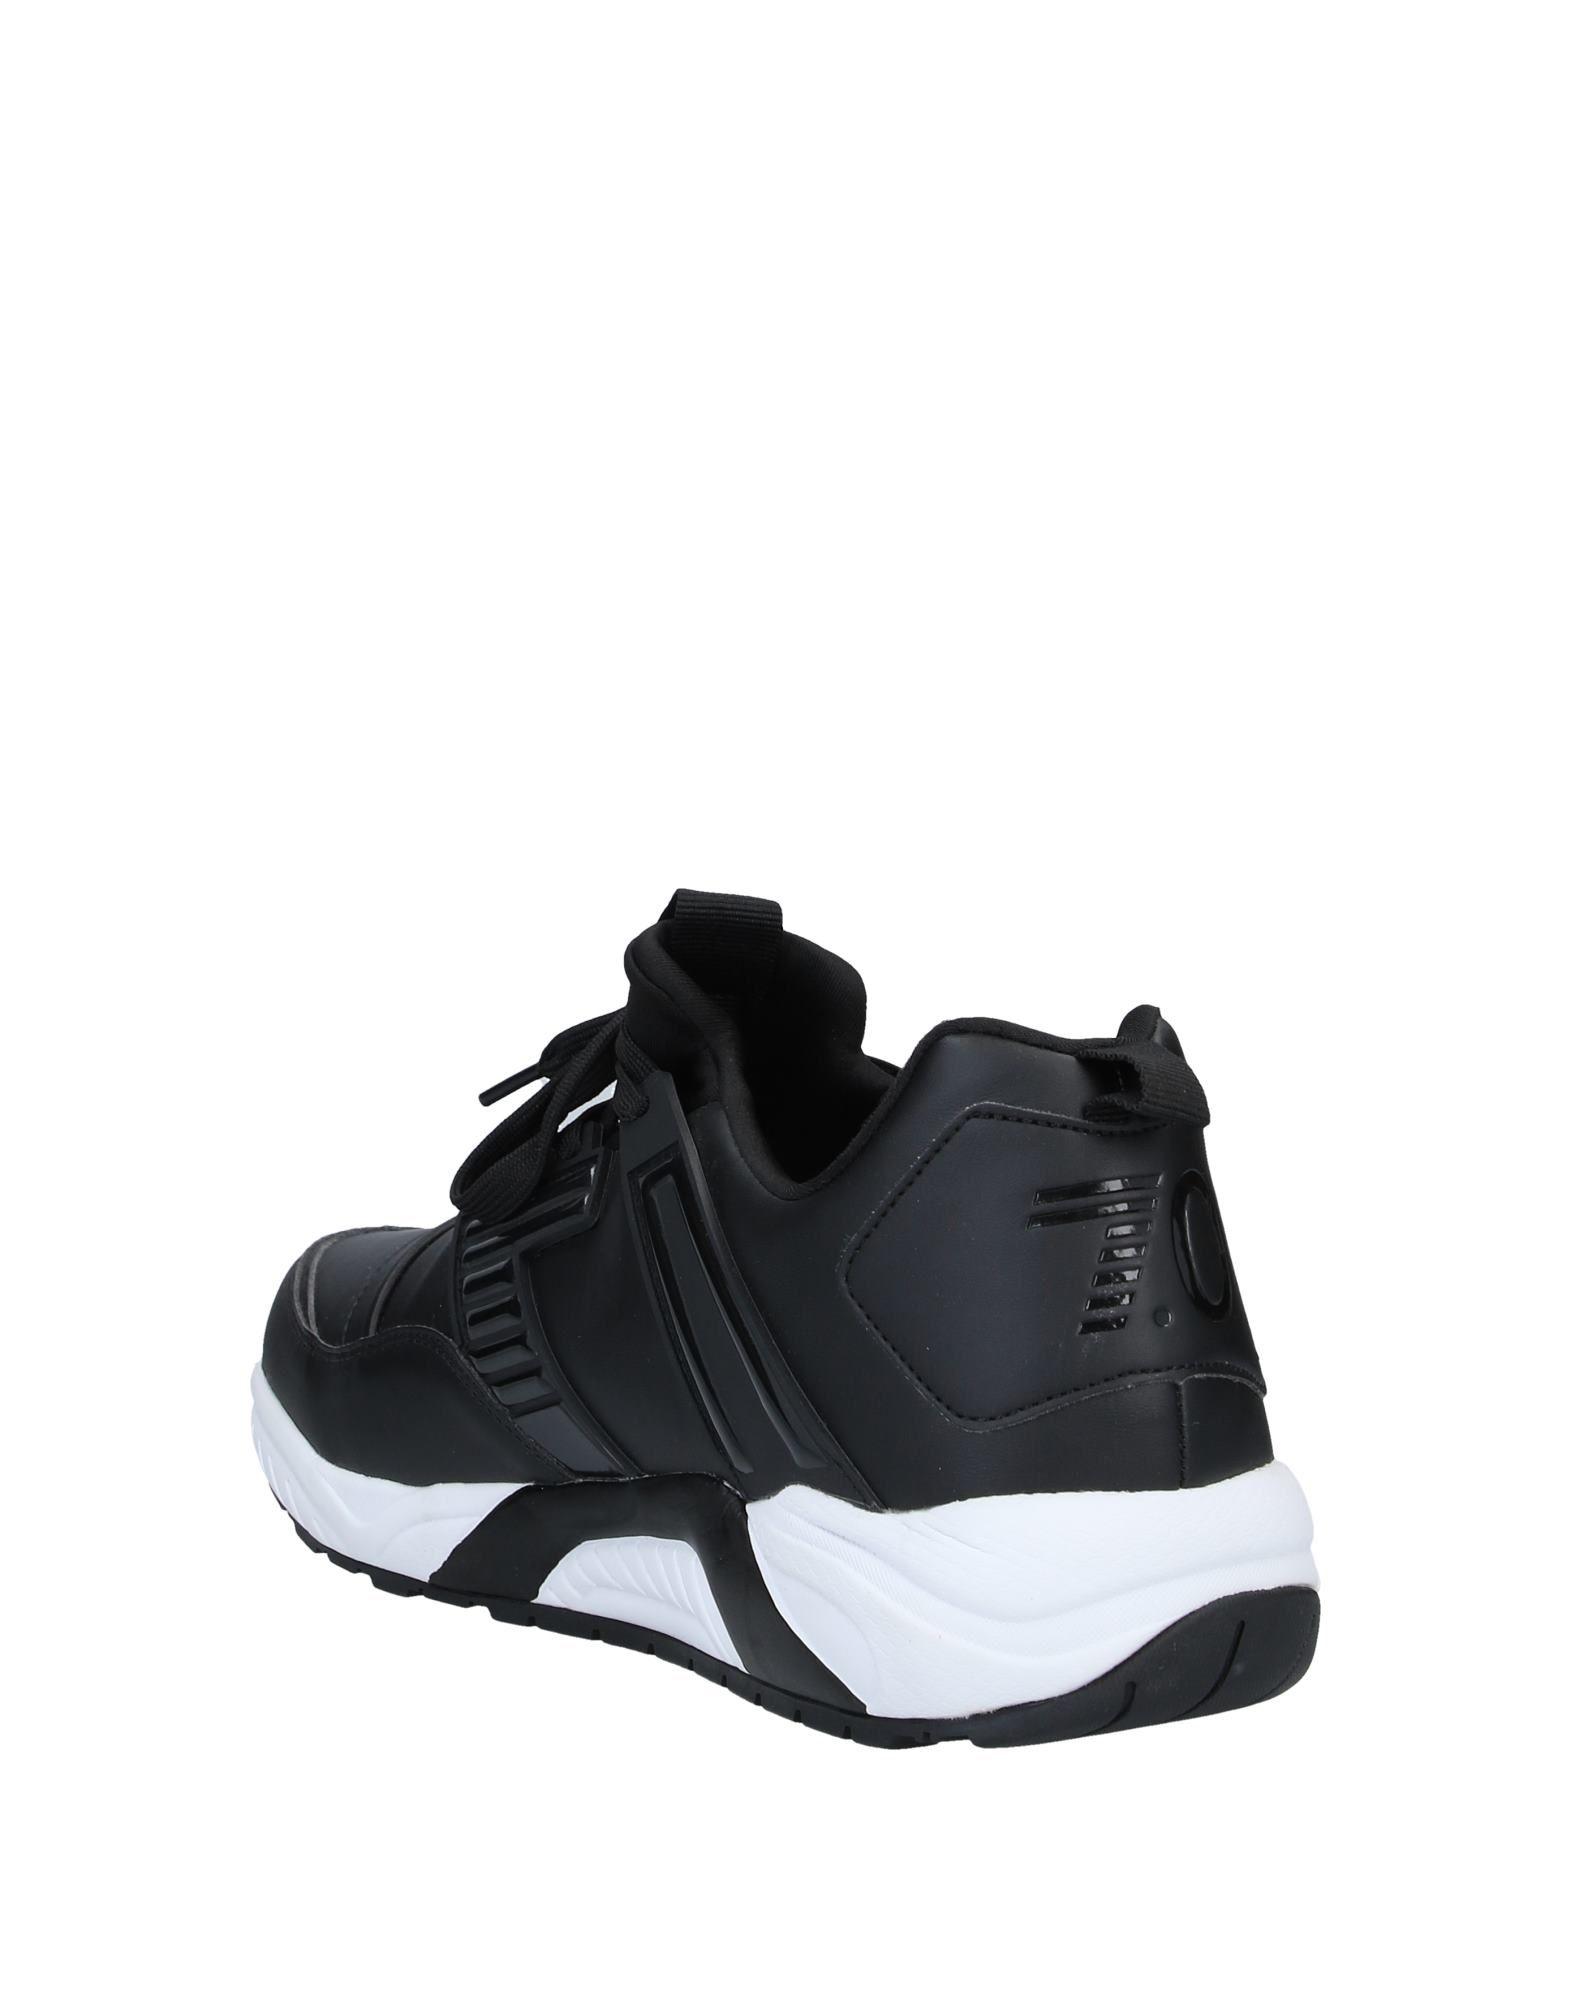 EA7 Low-tops & Sneakers in Black for Men - Lyst